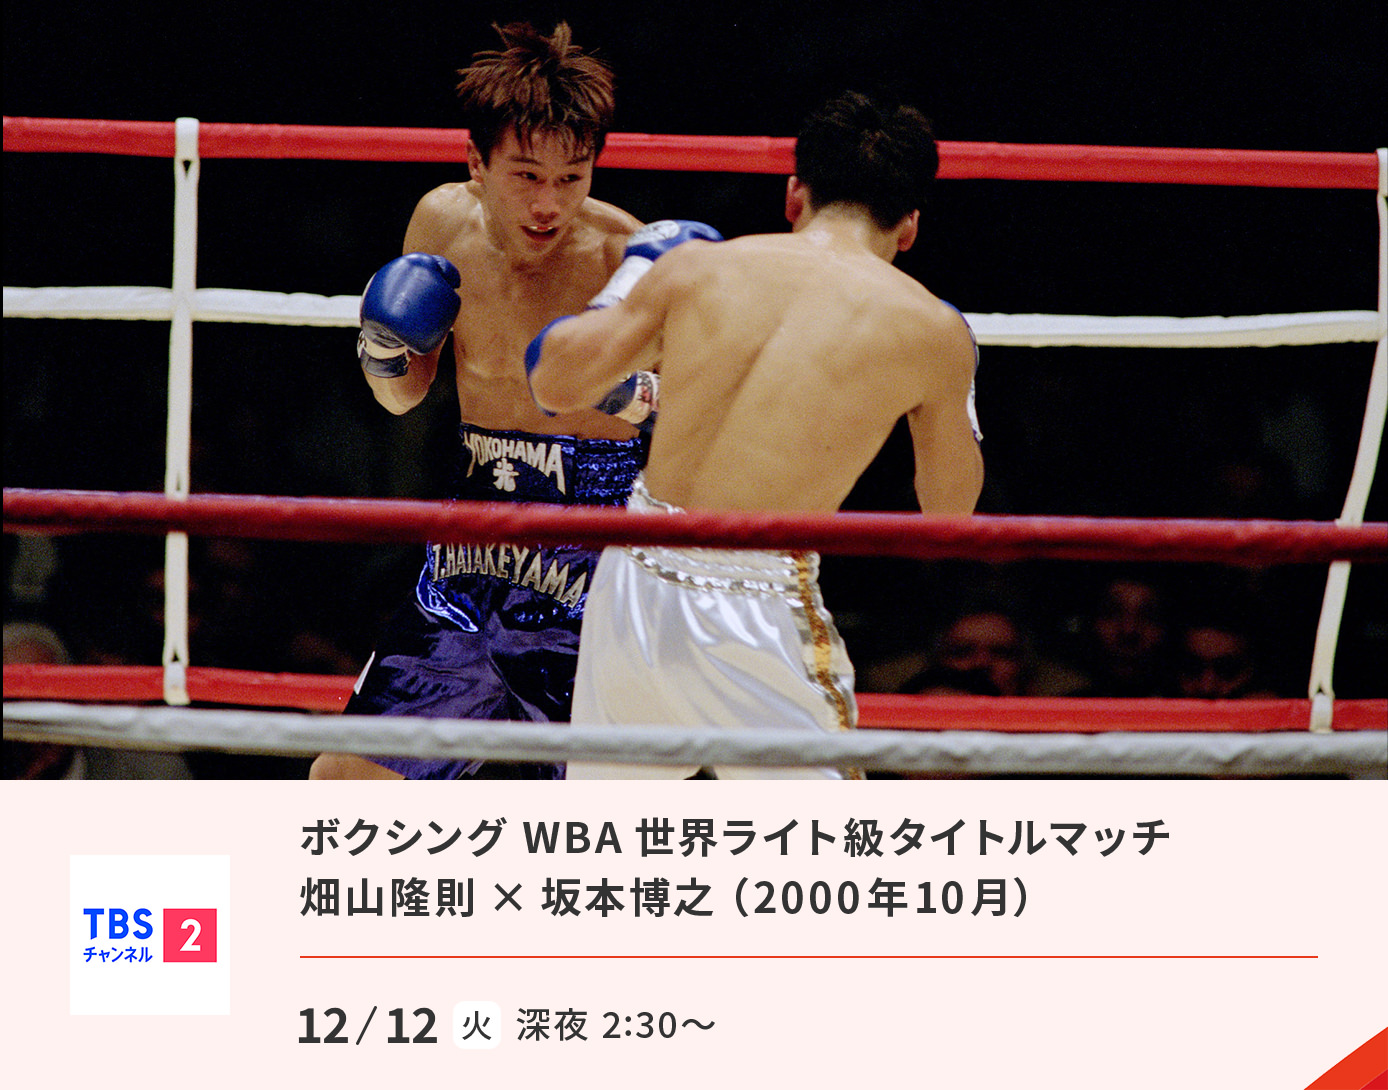 WBA世界ライト級タイトルマッチ 畑山隆則×坂本博之